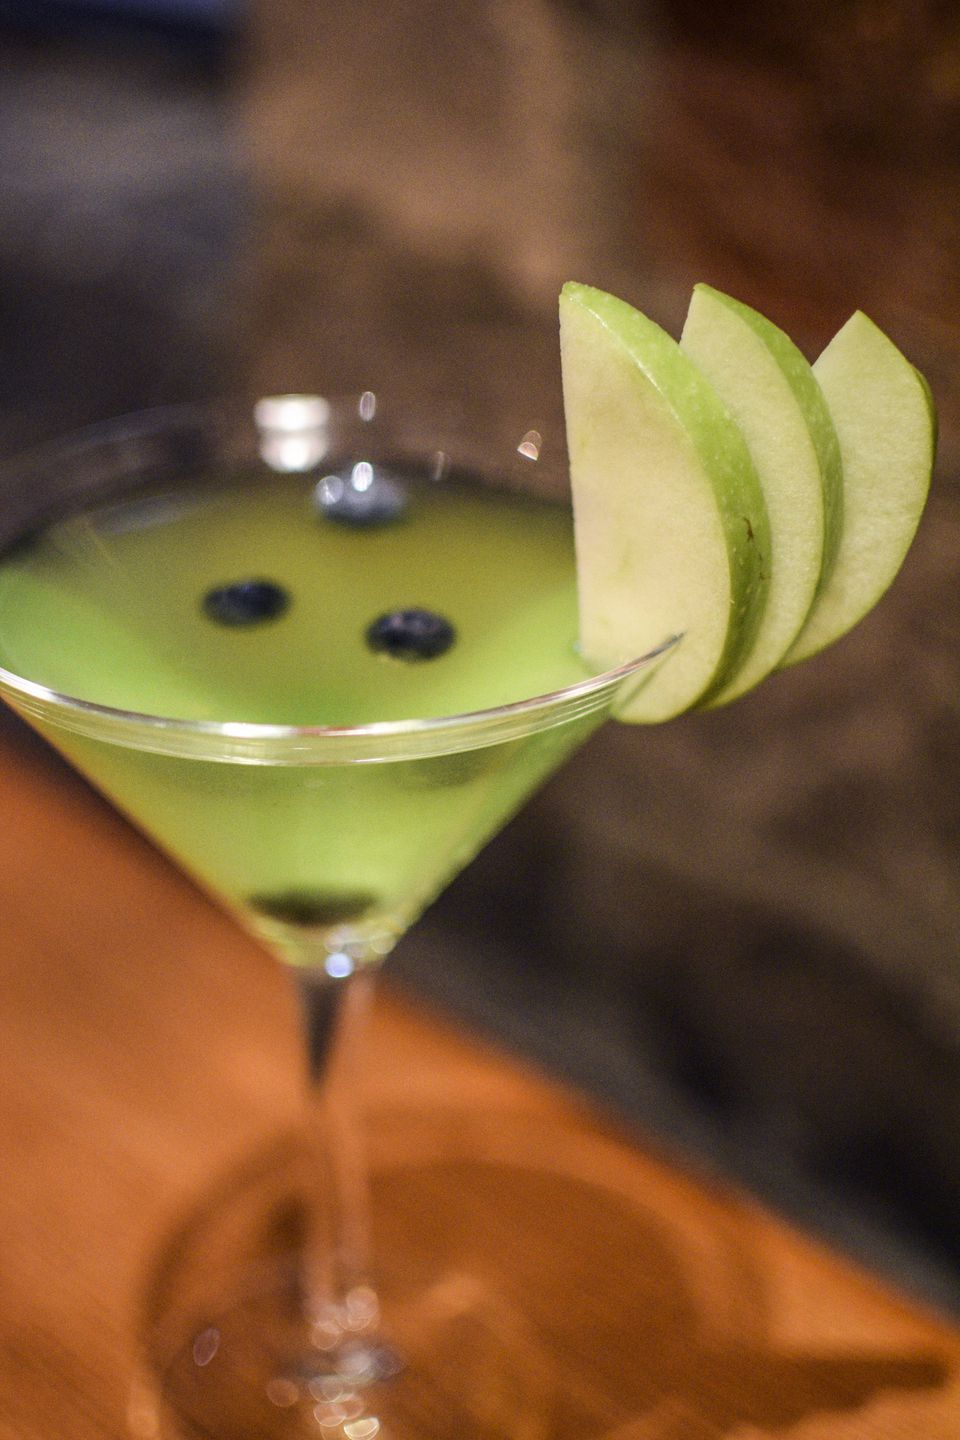 Apple Martinis: 3 Delicious Recipes to Explore